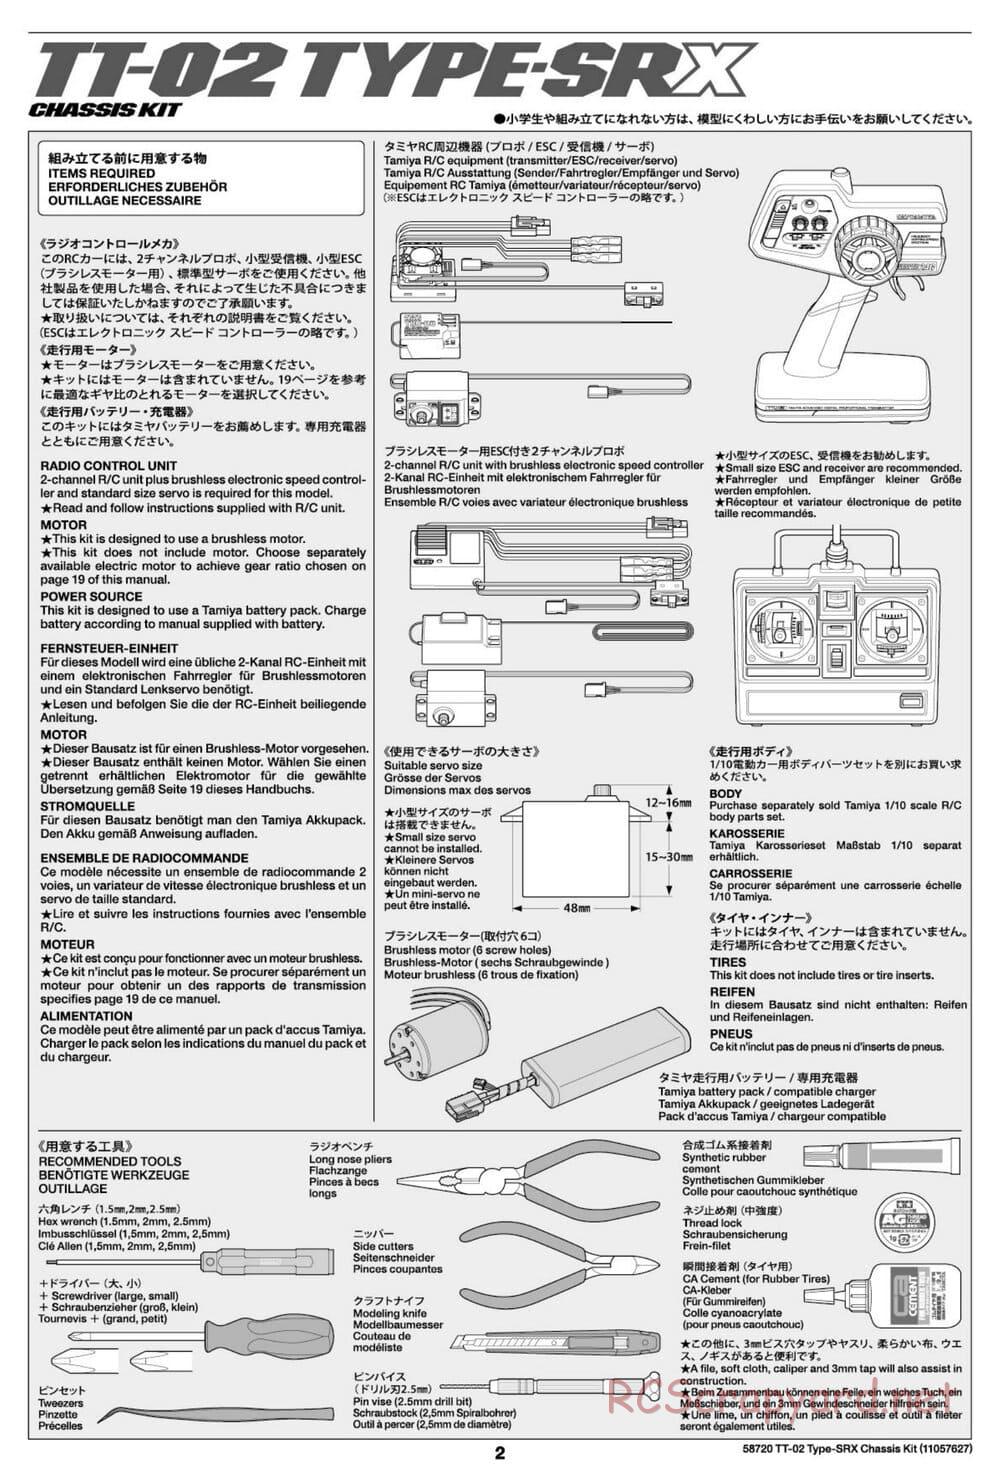 Tamiya - TT-02 Type-SRX Chassis - Manual - Page 2